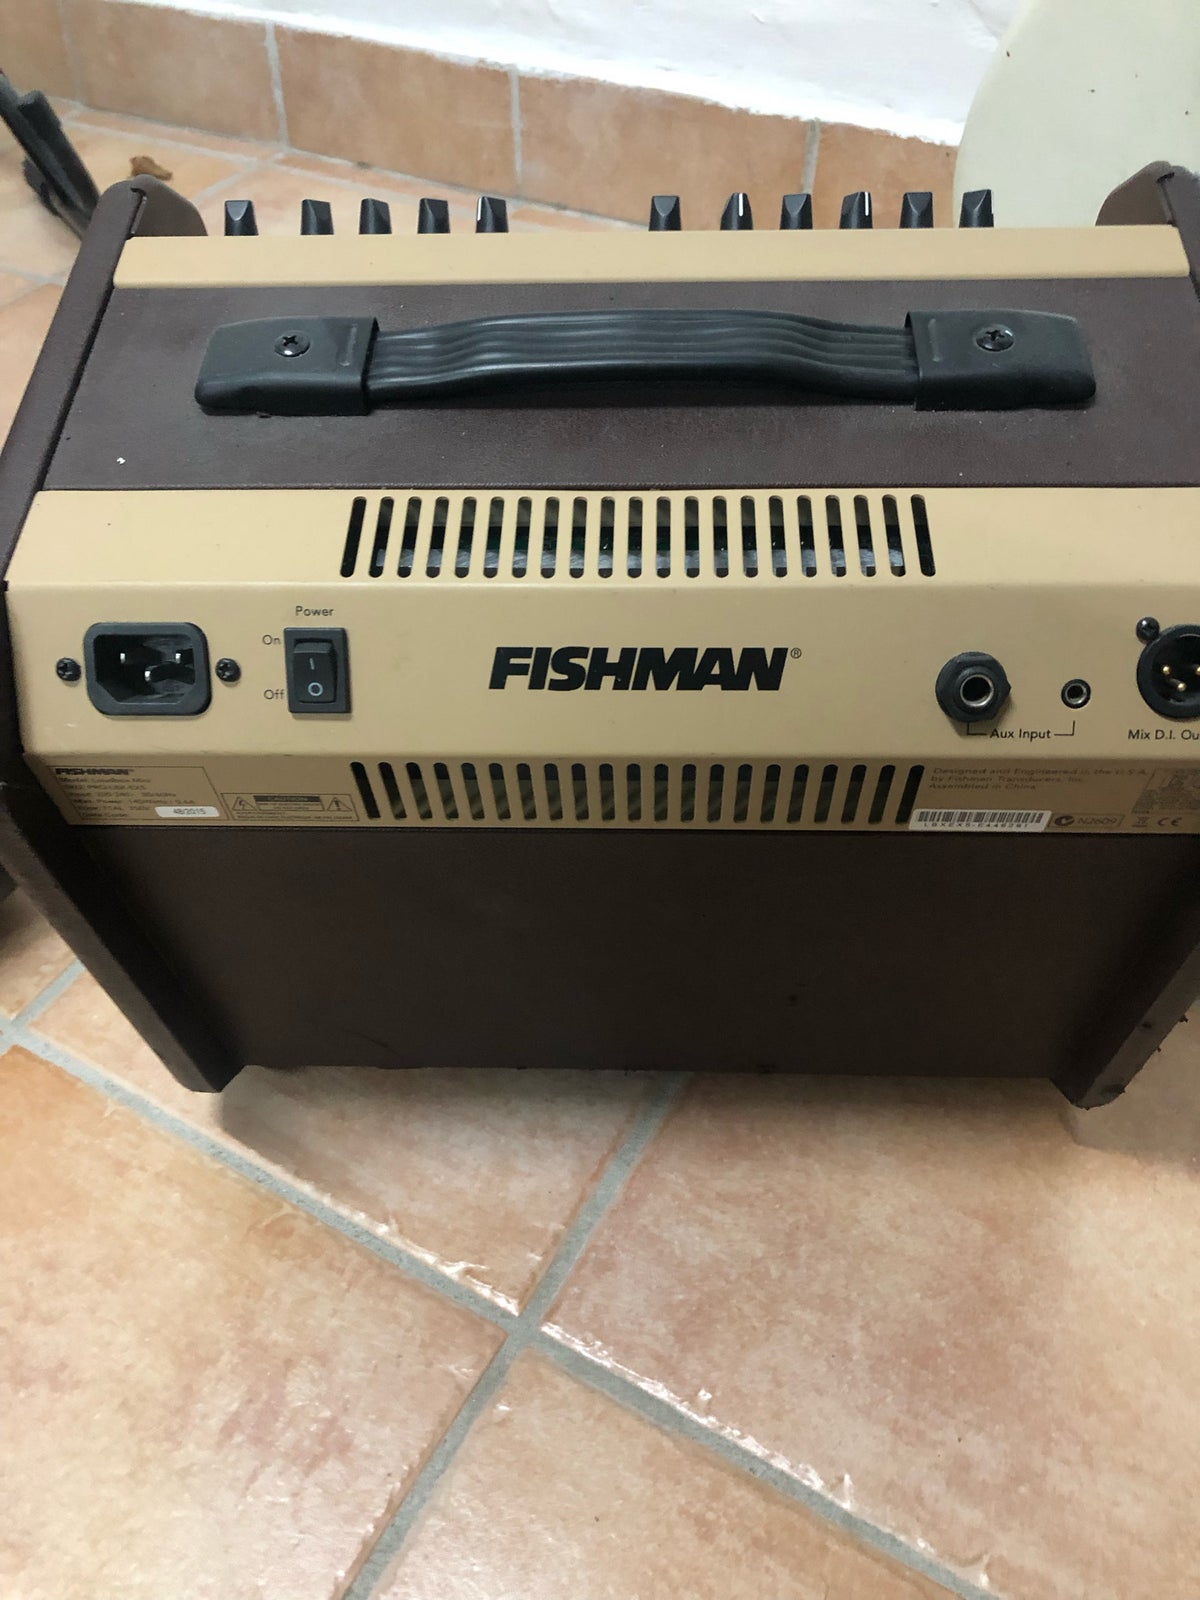 Guitarcombo, Fishman Mini, 60 W